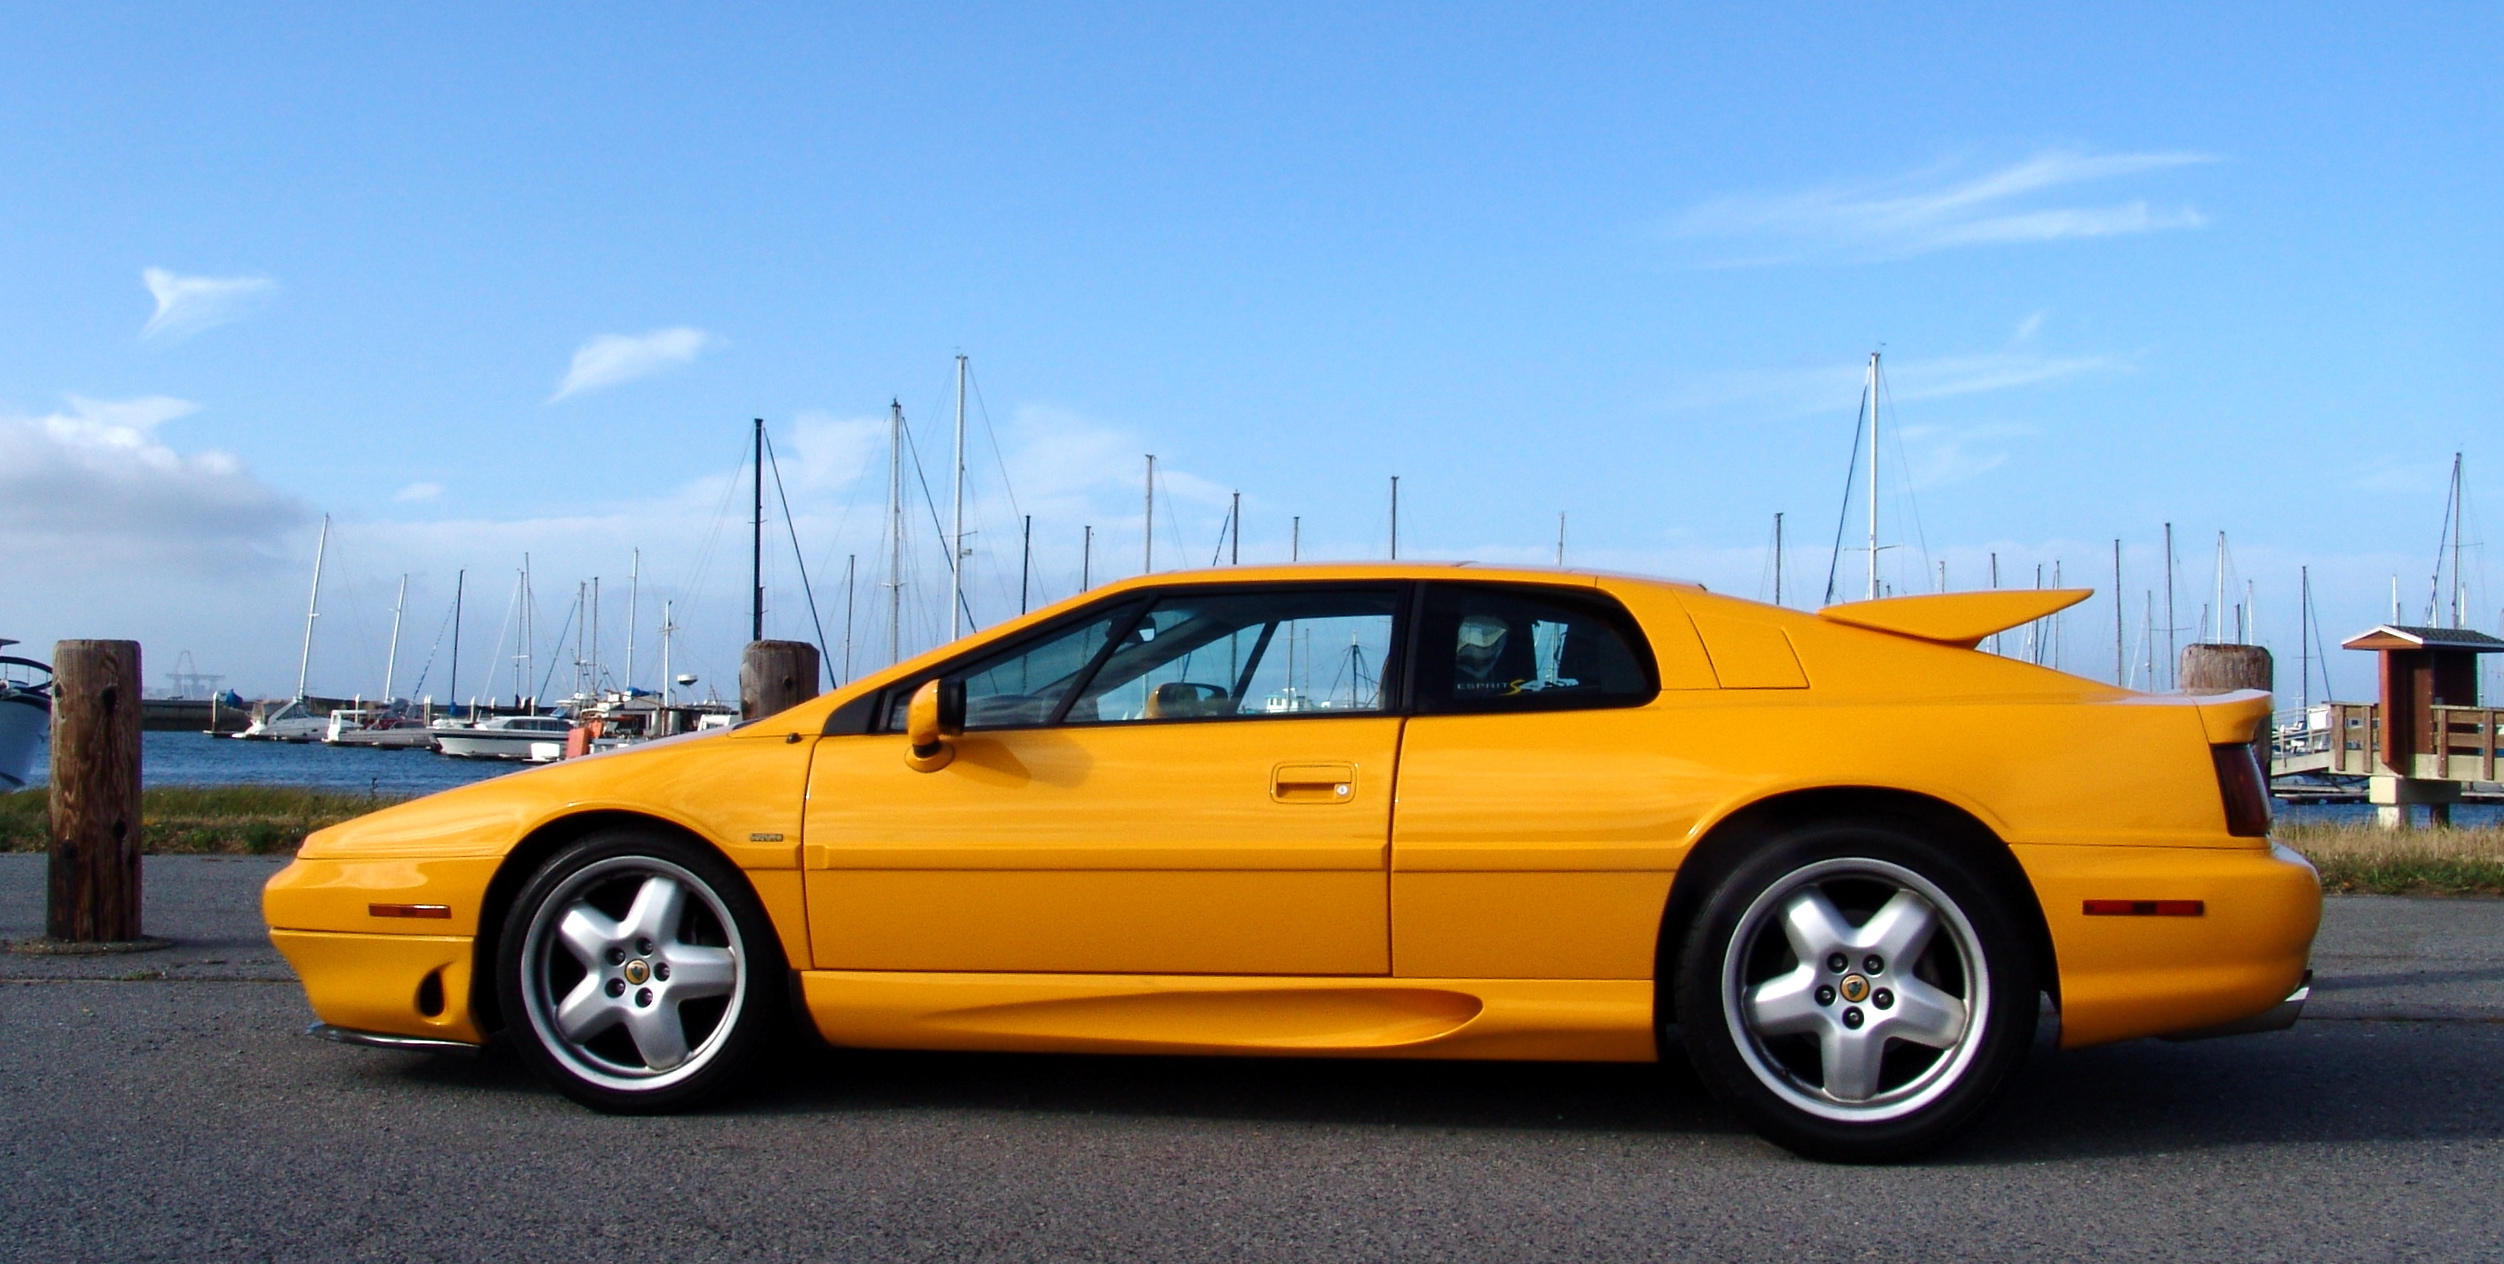 Lotus Esprit S4 | Flickr - Photo Sharing!